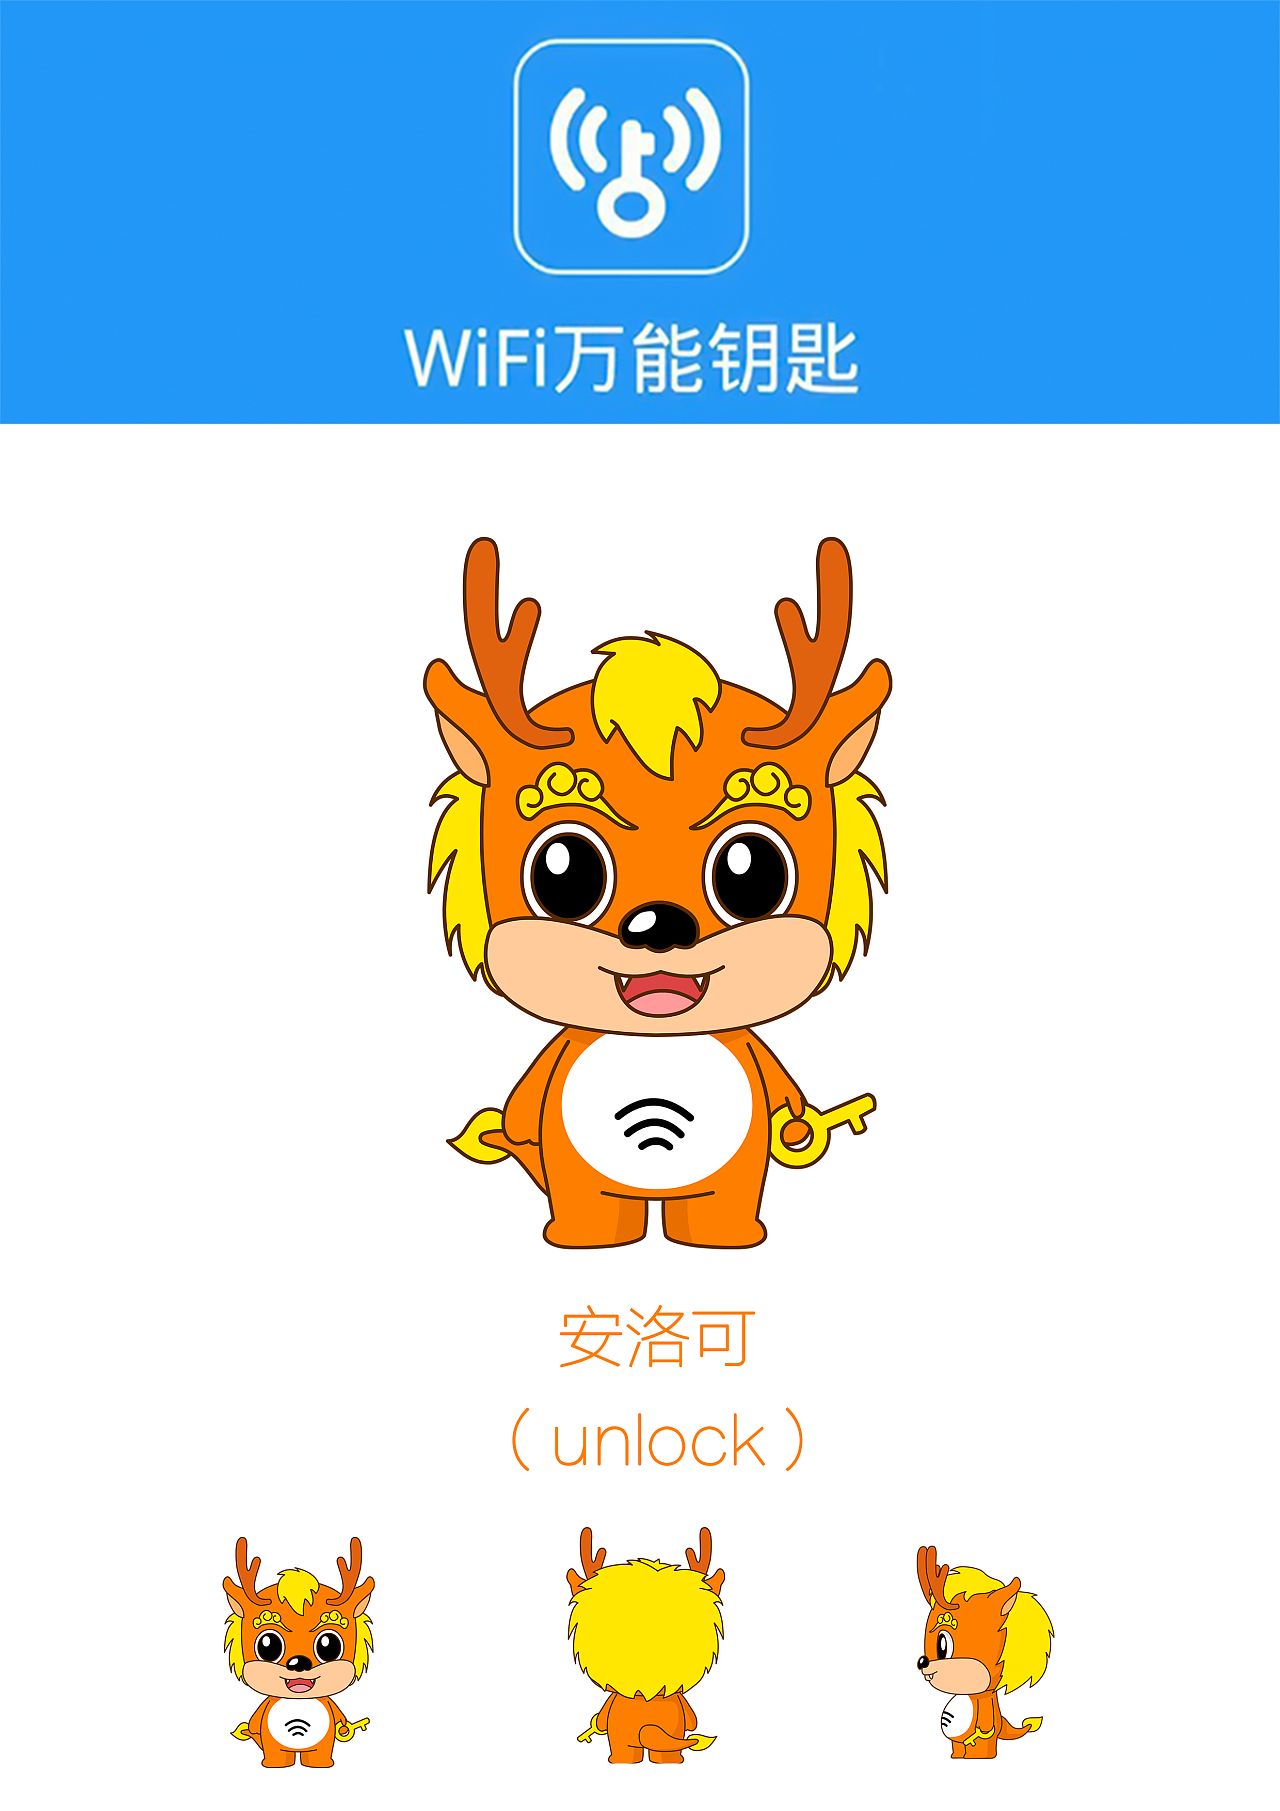 wifi万能钥匙吉祥物:麒麟-安洛可